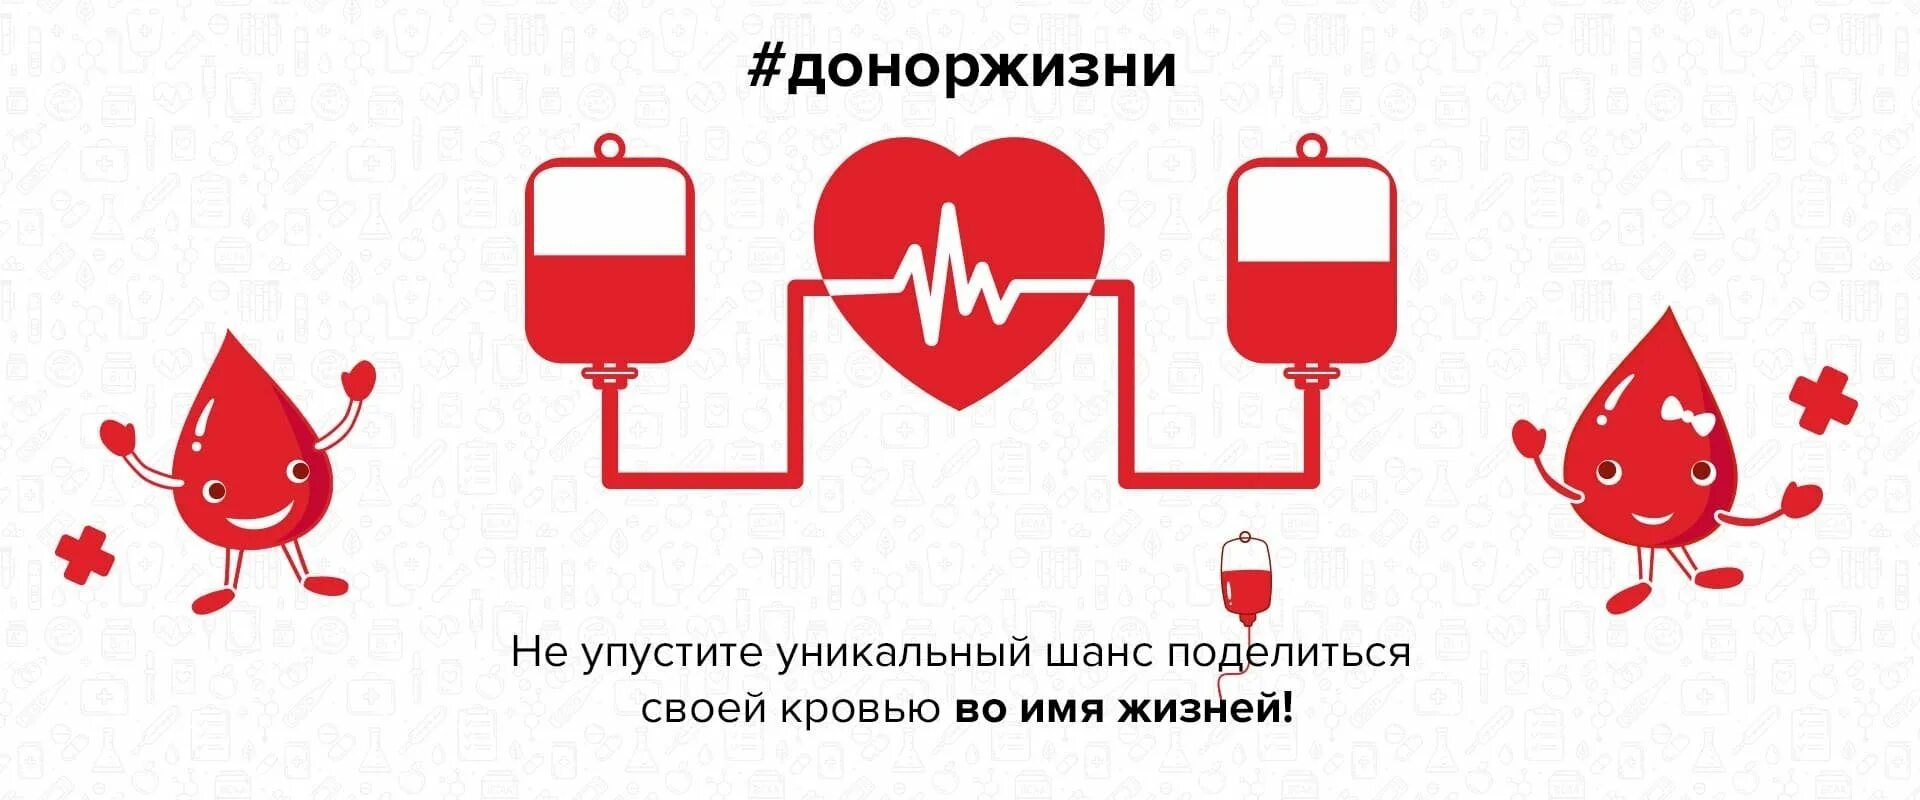 Донорство картинки. Донорство крови плакат. Донорство рисунок. Донорство крови рисунок. Покажи донор